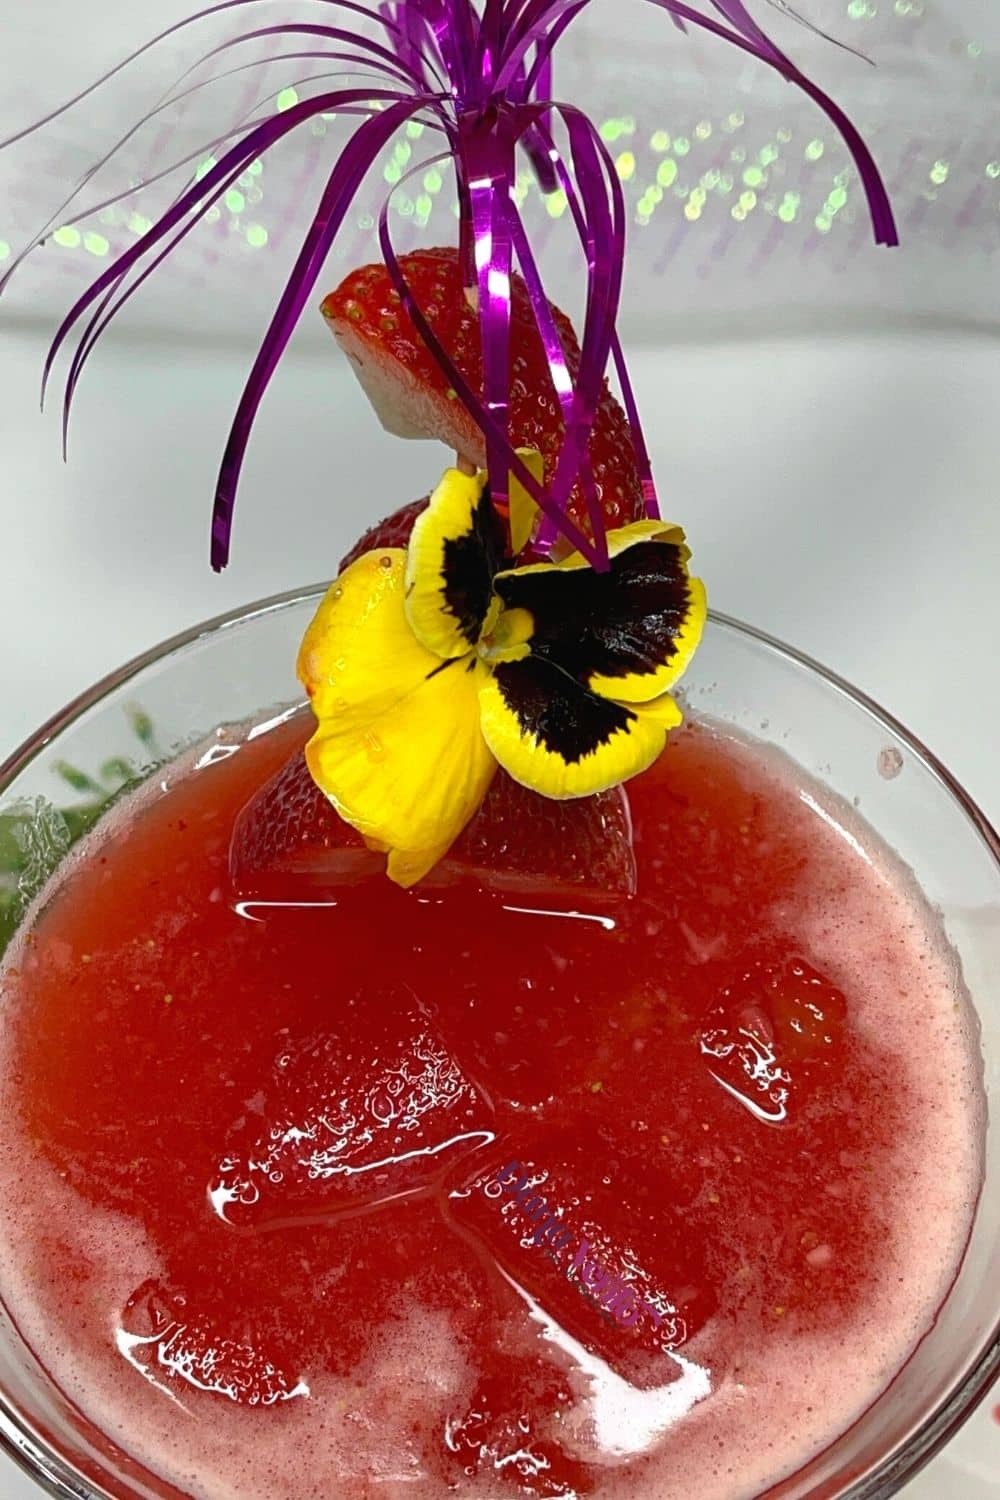 prepared and poured martini with strawberries in a martini glass